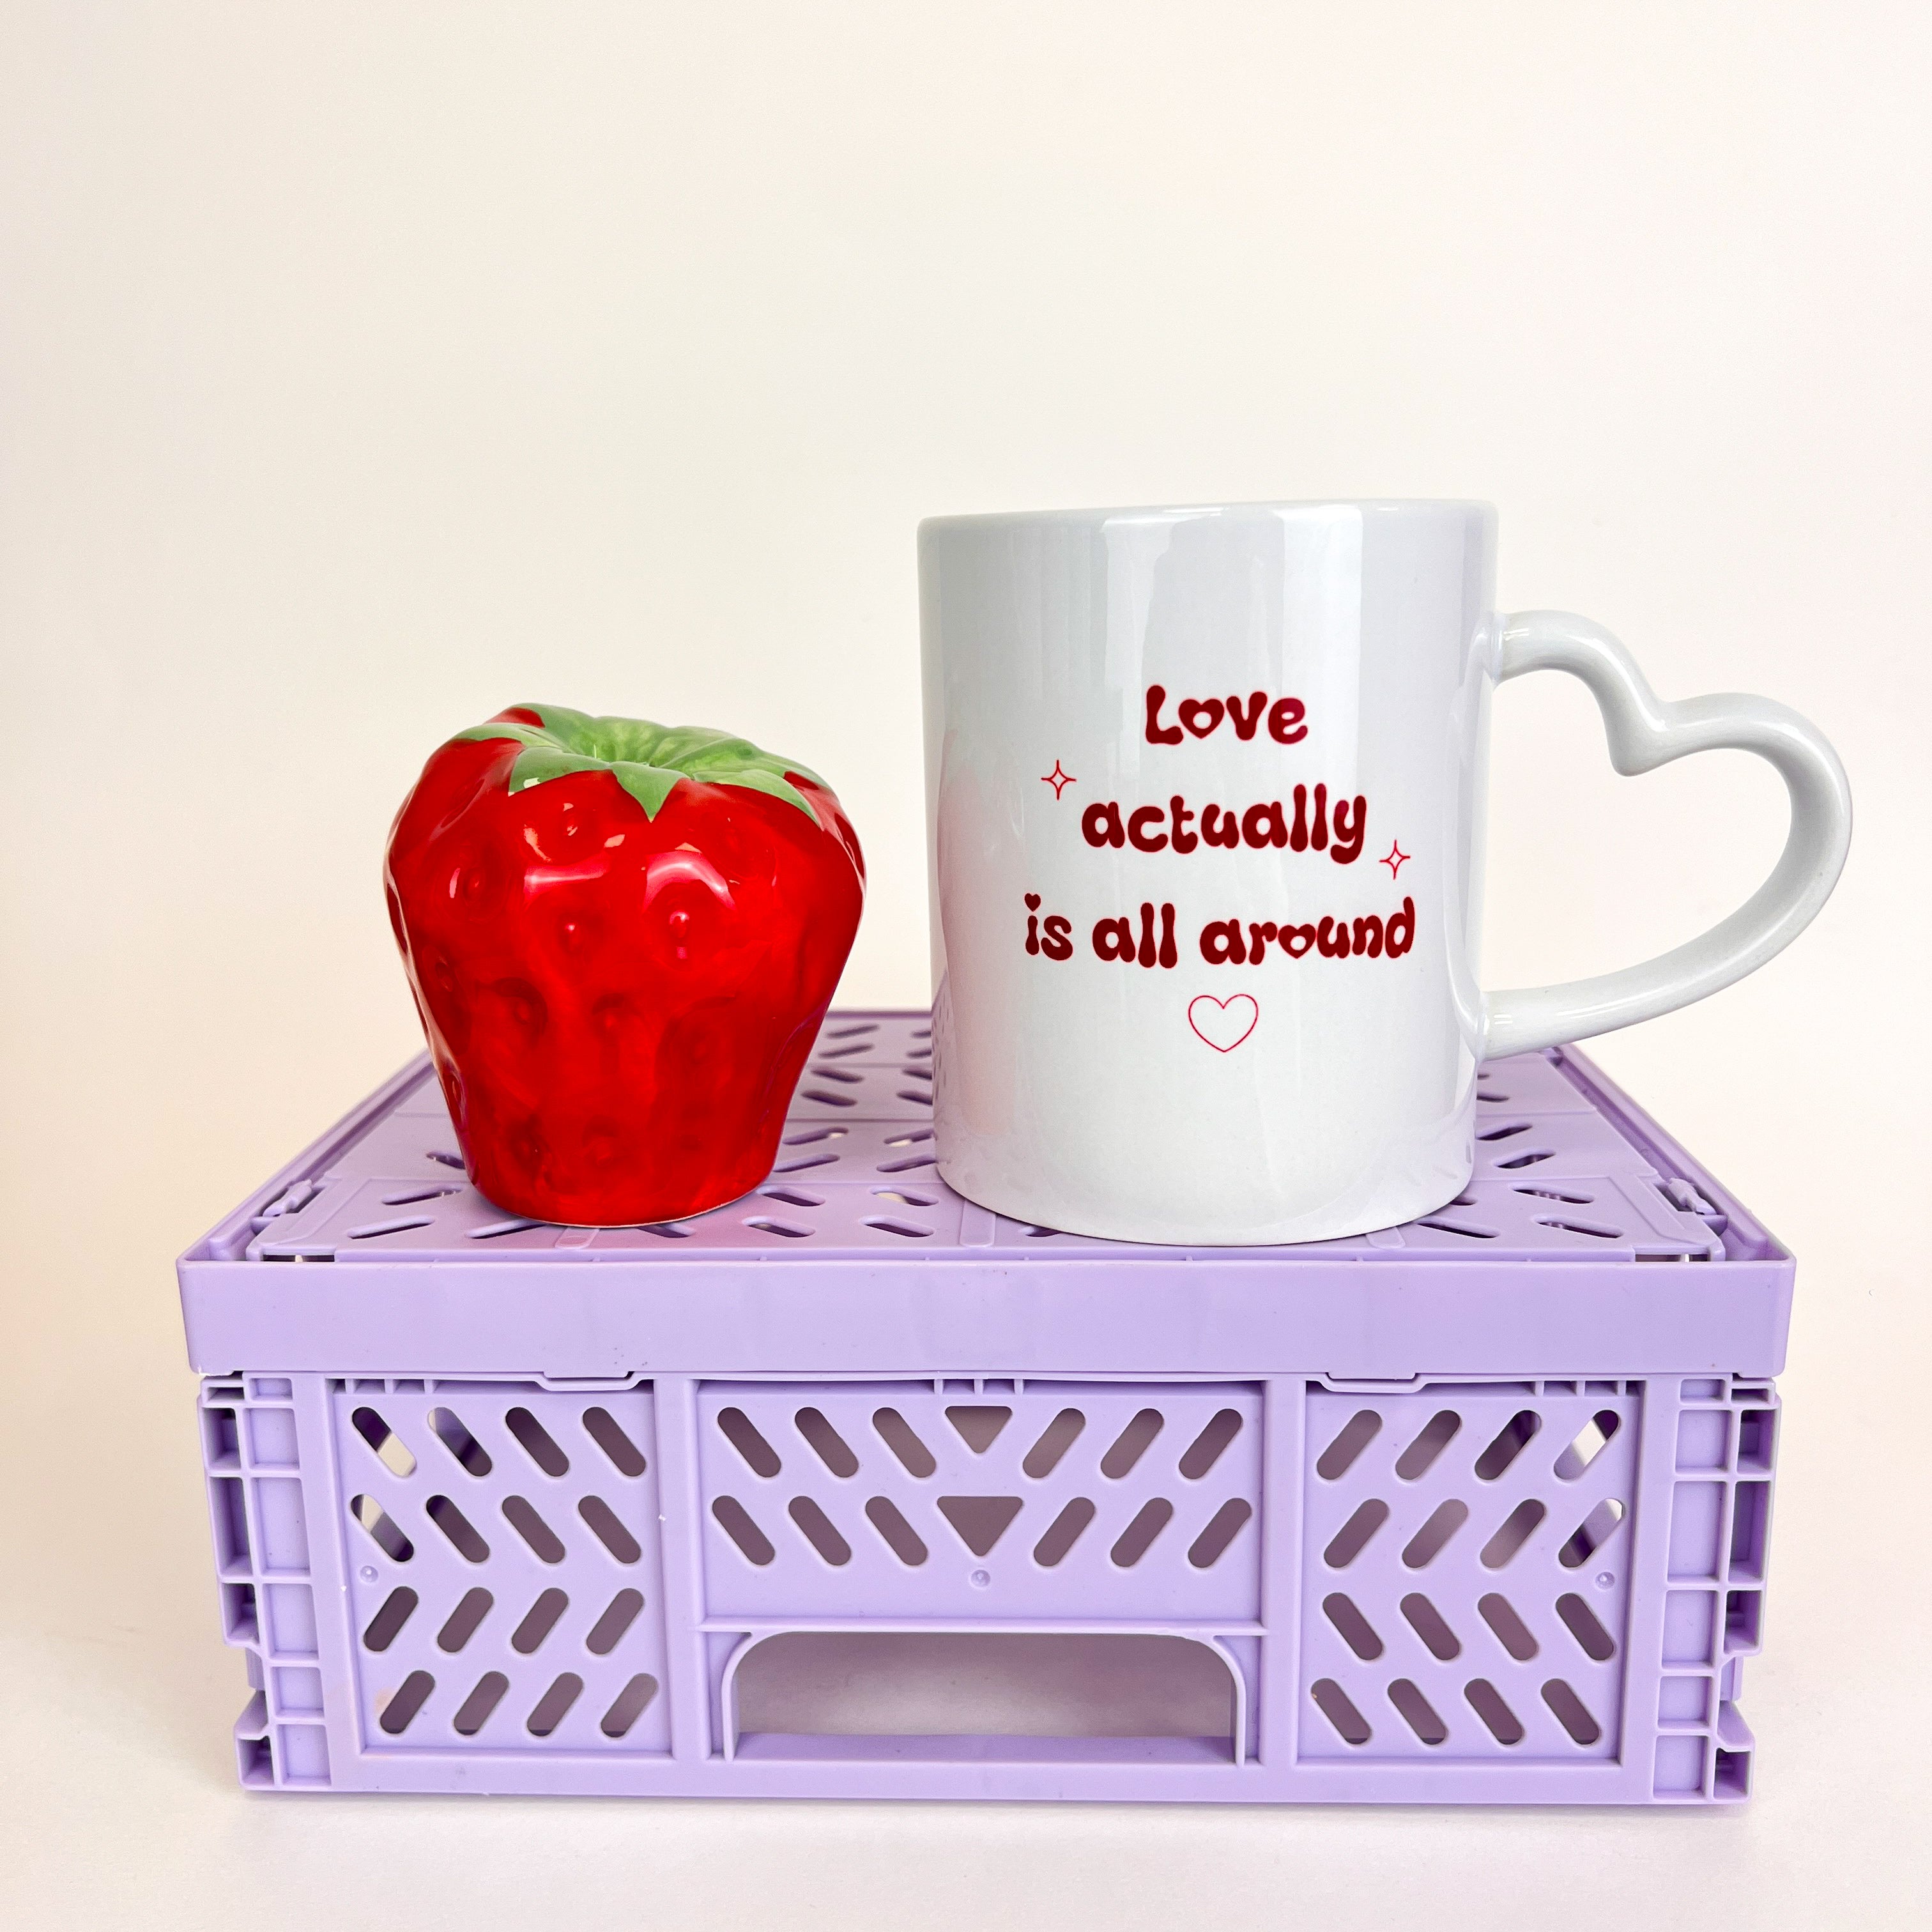 Love actually mug